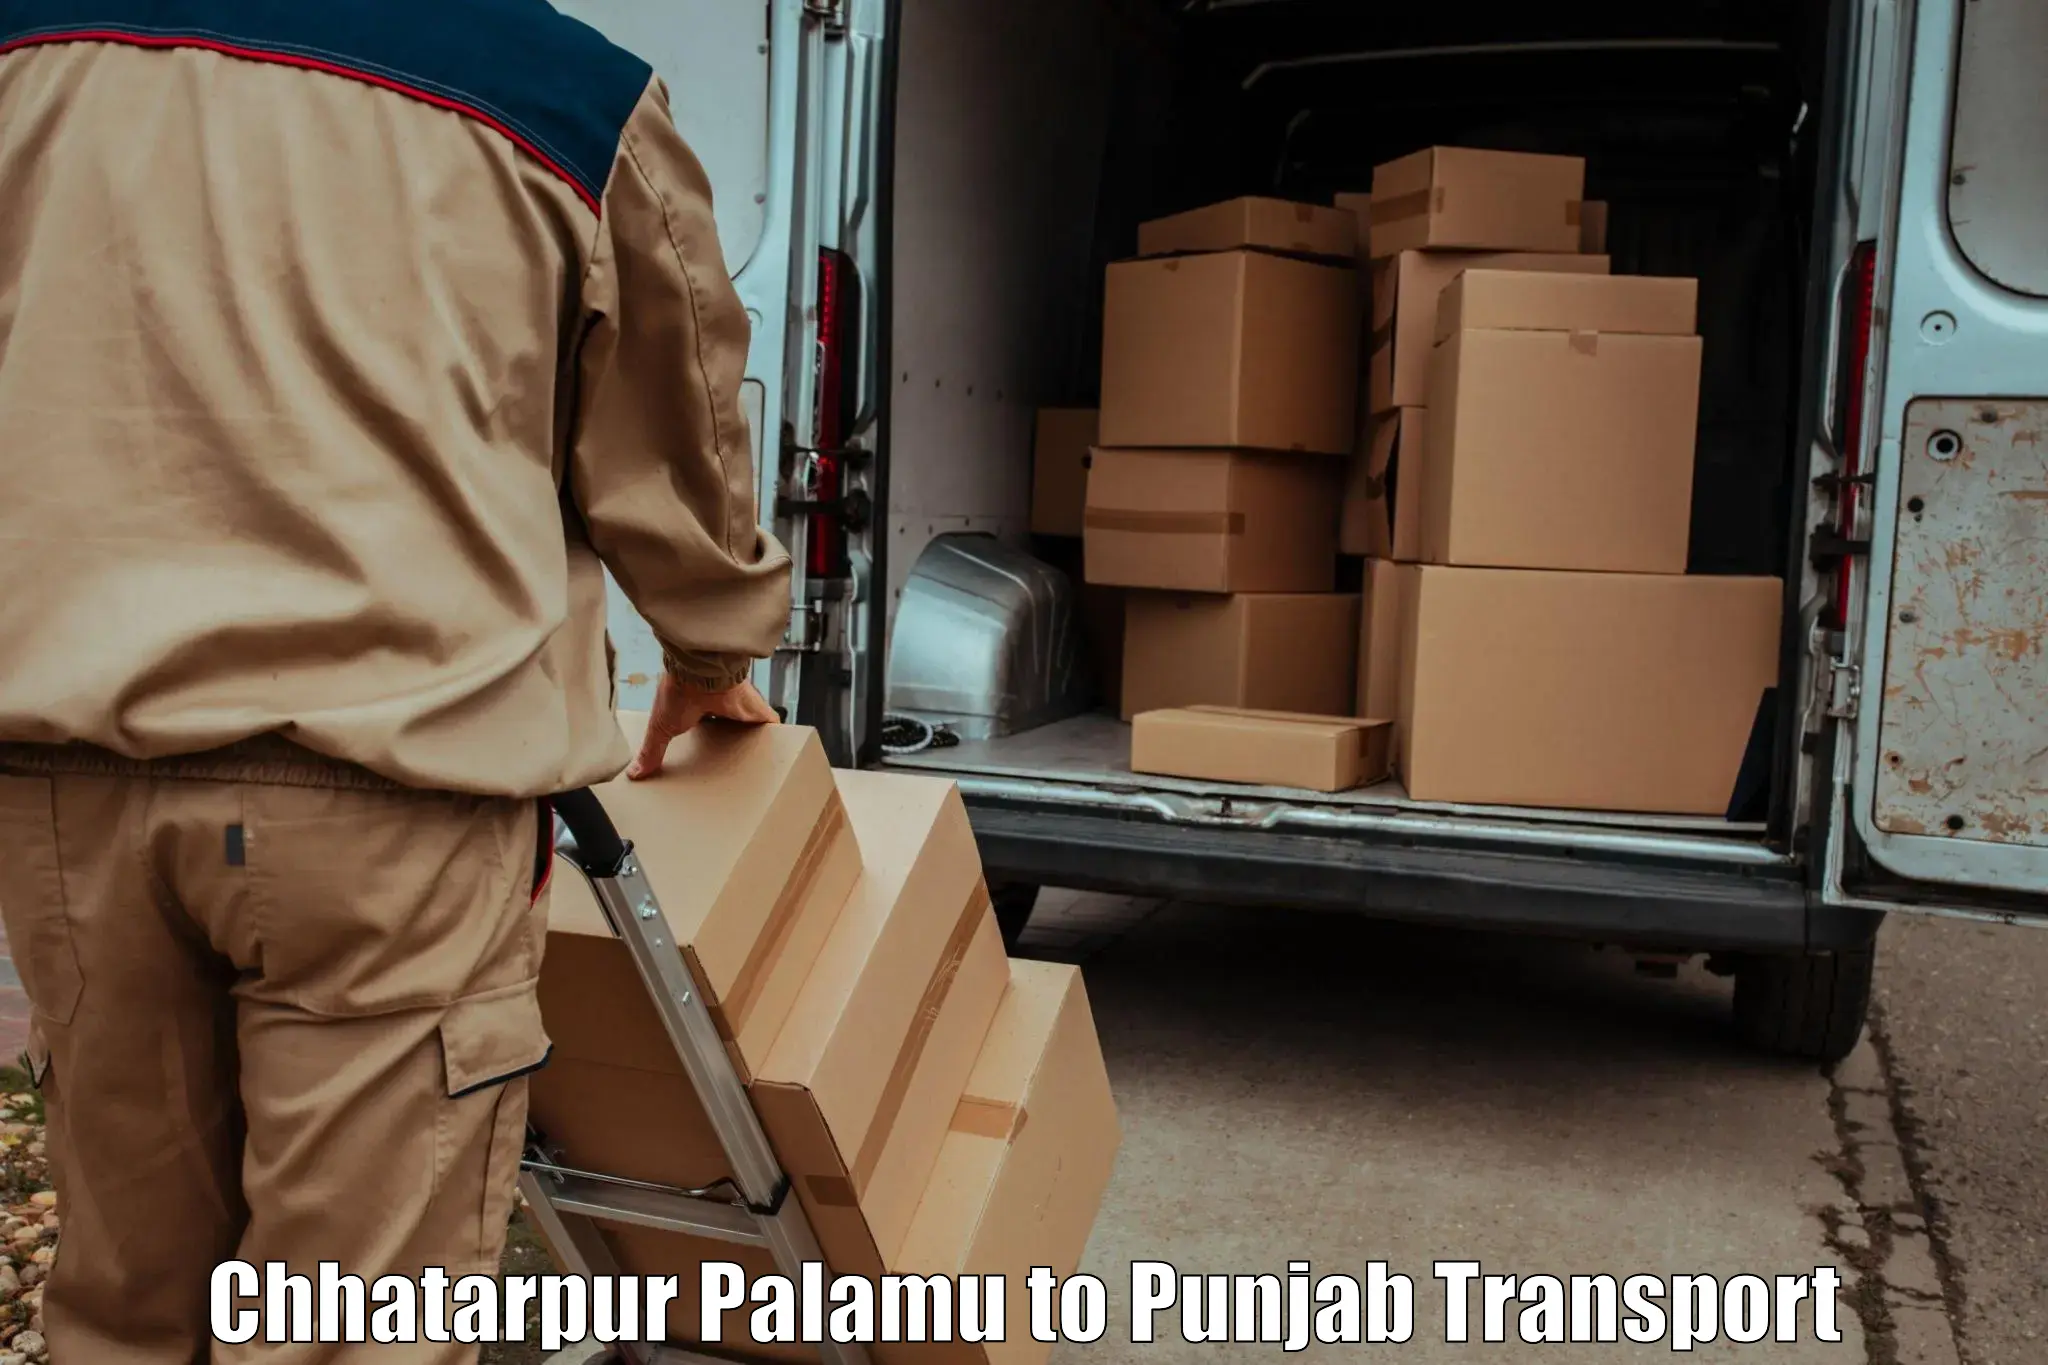 Road transport services in Chhatarpur Palamu to Moga